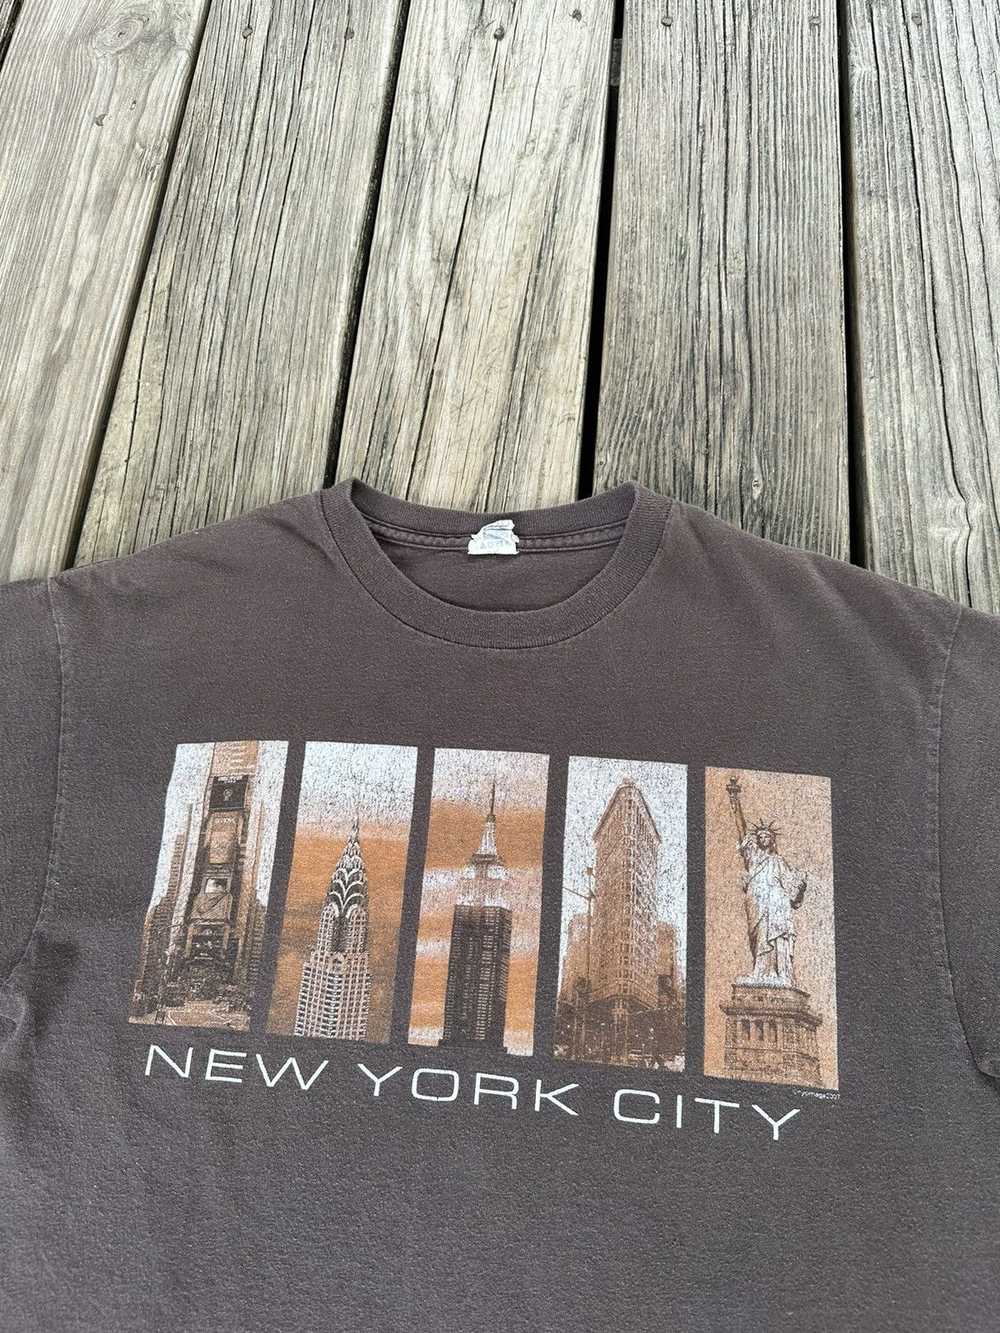 Delta 2007 New York City Shirt - image 3